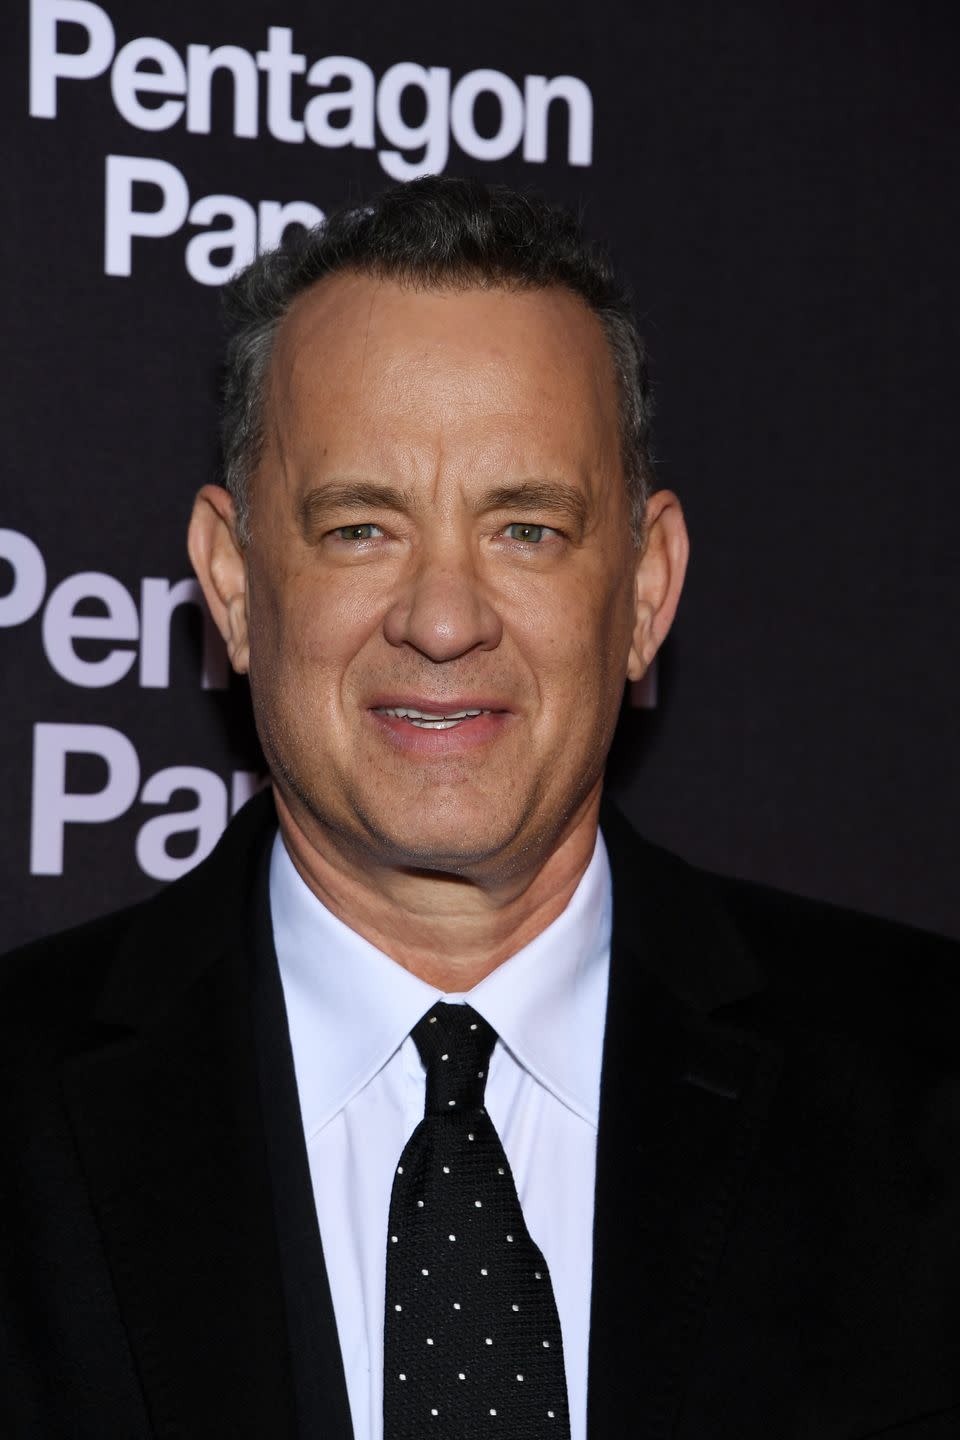 Tom Hanks: Type 2 Diabetes